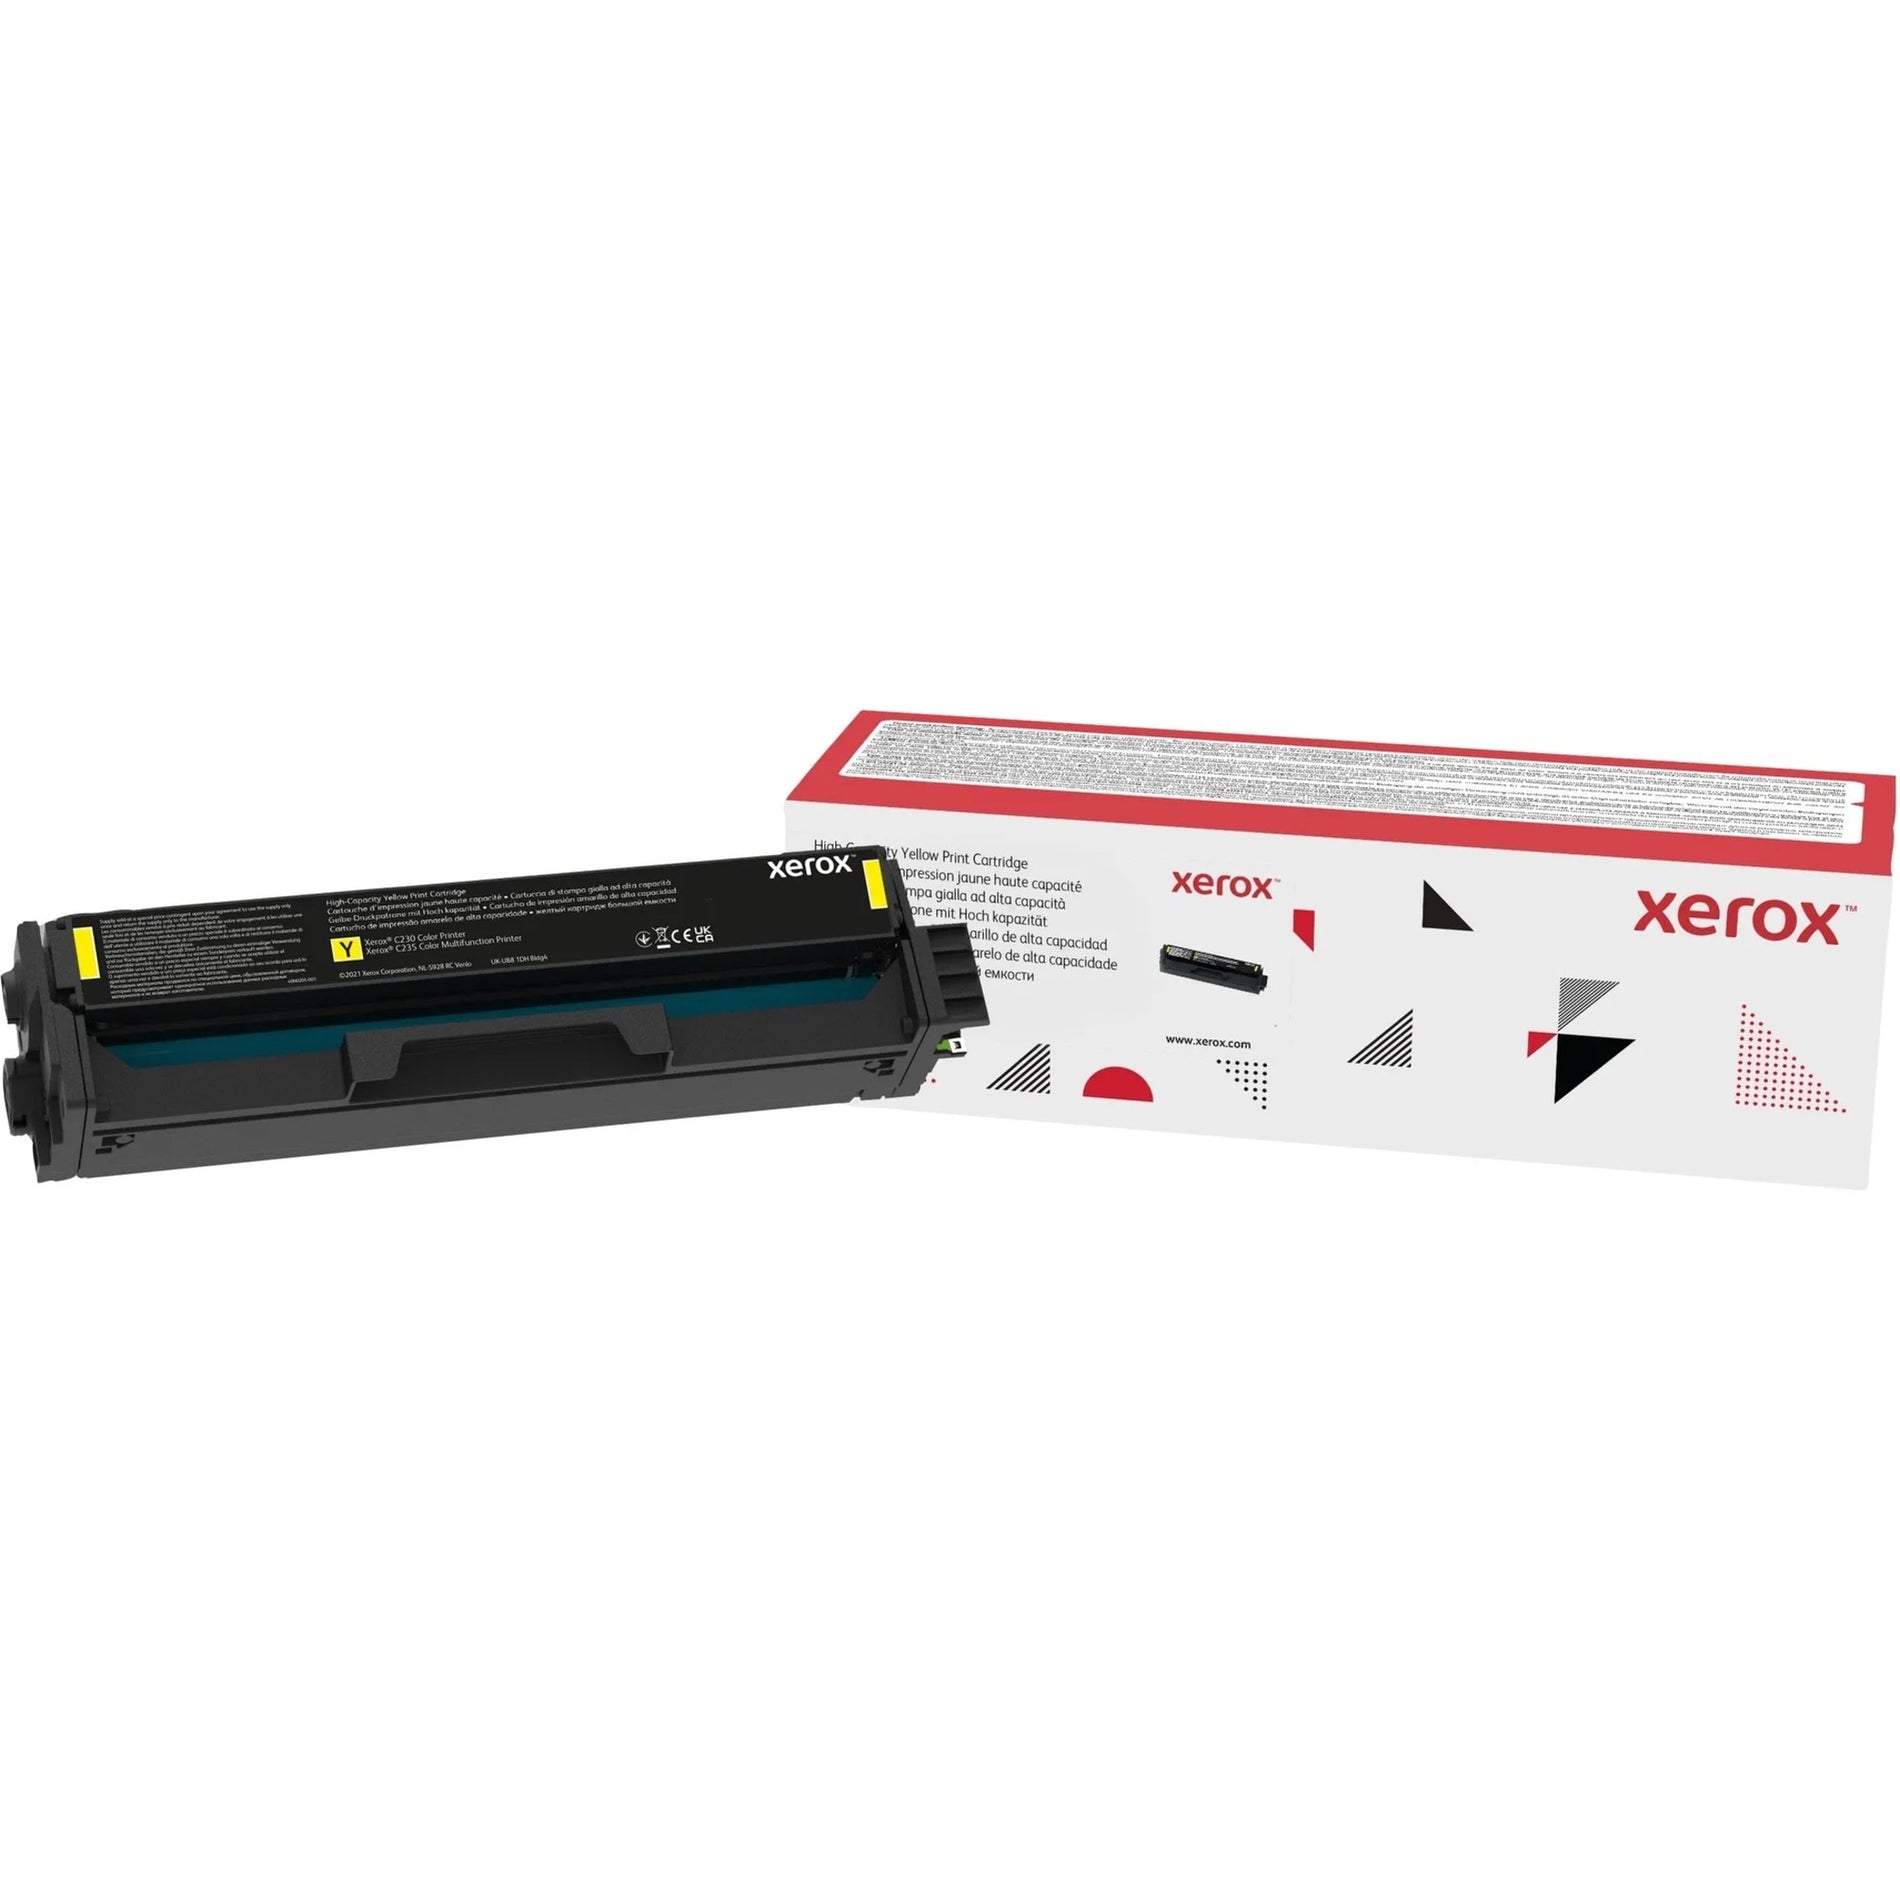 Xerox 006R04394 C230 / C235 Yellow High Capacity Toner Cartridge (2,500 pages), Original